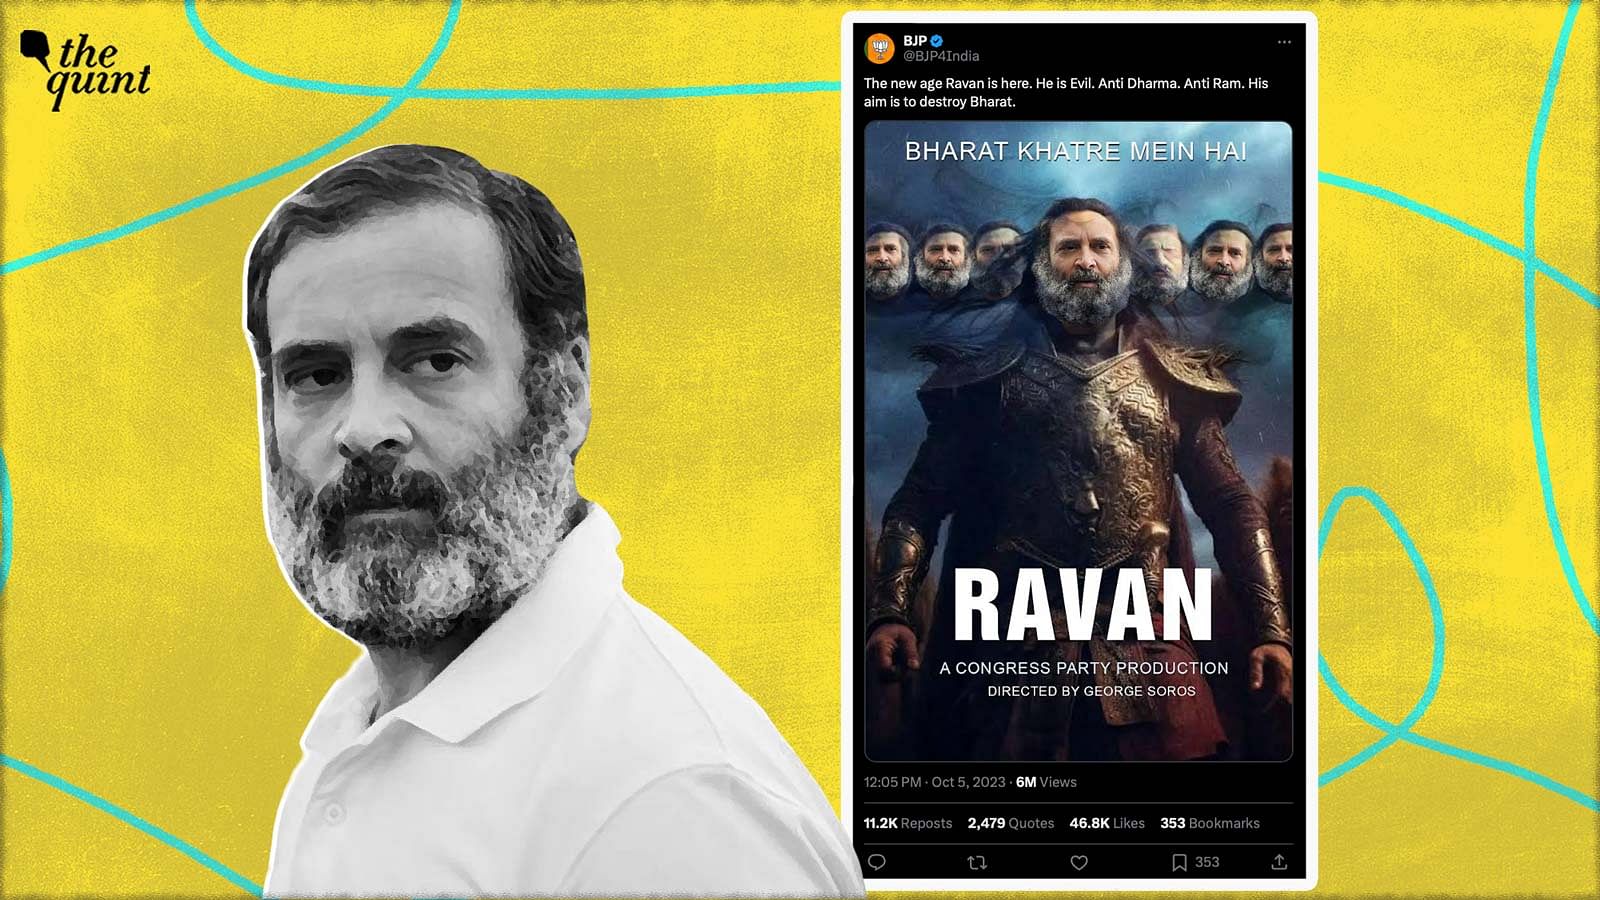 <div class="paragraphs"><p>(BJP put out an image comparing Rahul Gandhi with Ravan)</p></div>